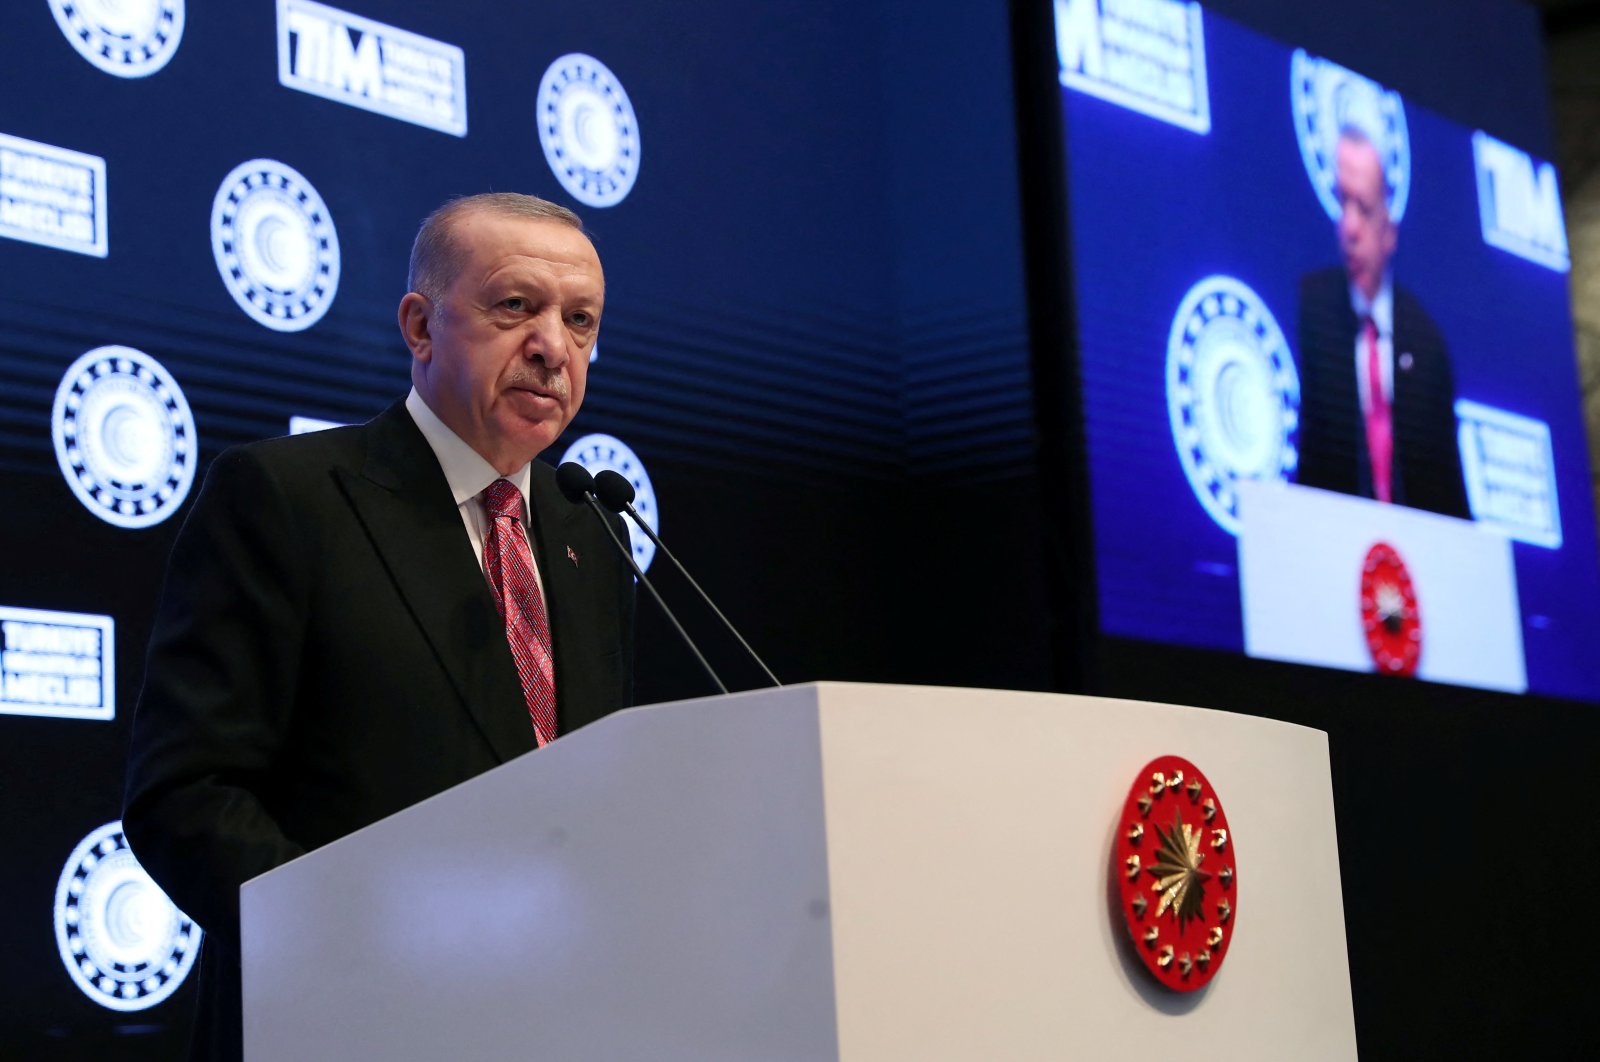 President Recep Tayyip Erdoğan addresses businesspeople during a meeting in Istanbul, Turkey, Jan. 3, 2022. (Reuters Photo)